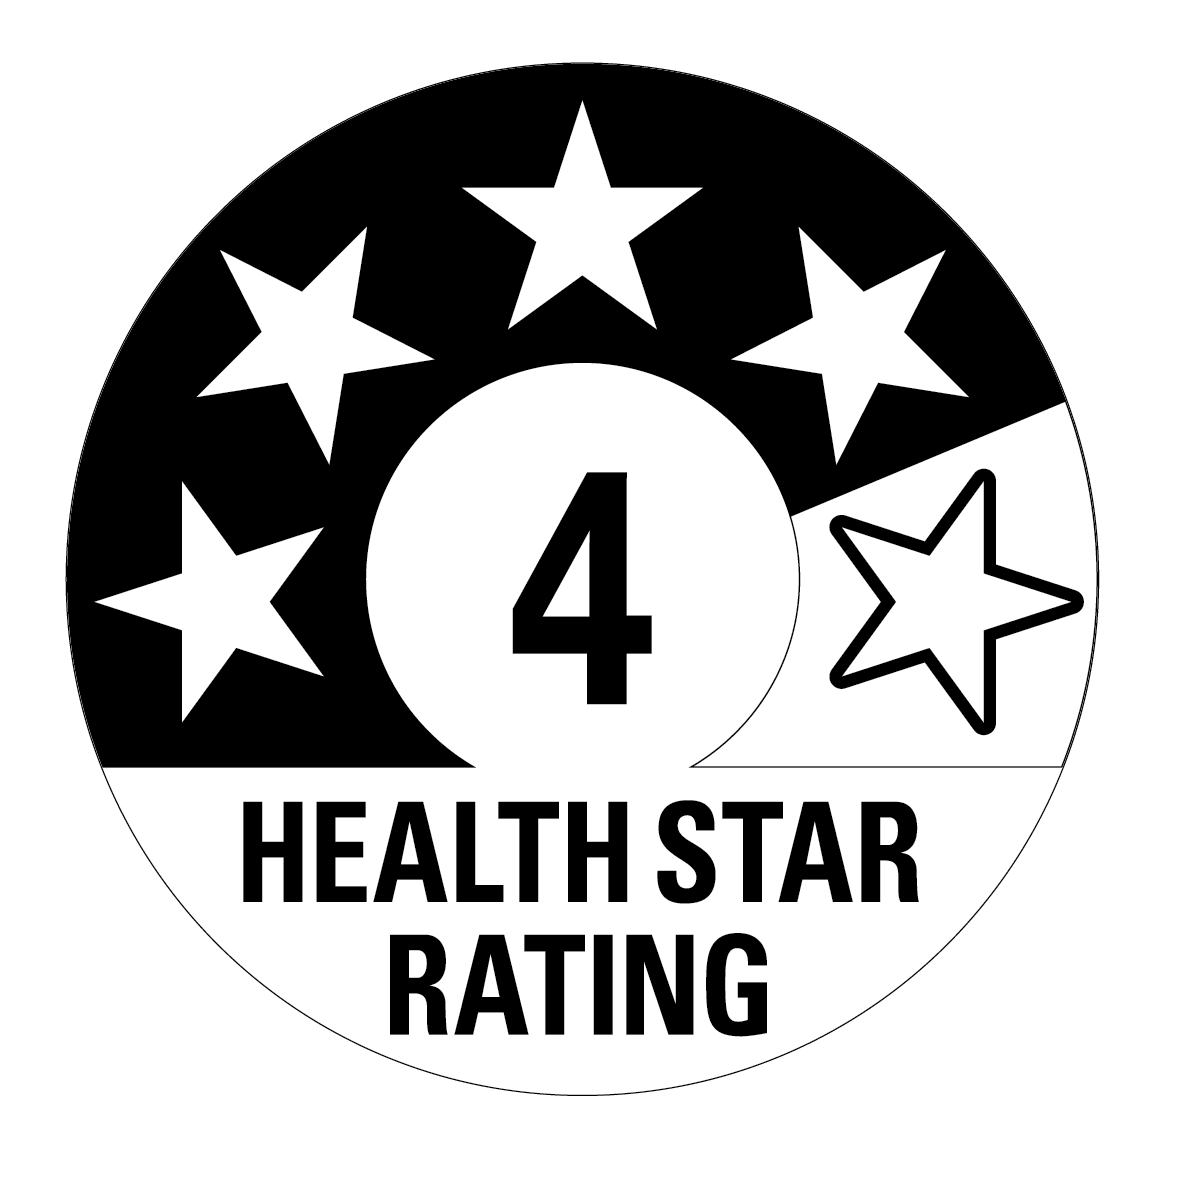 Health Star Rating displaying a 4 rating